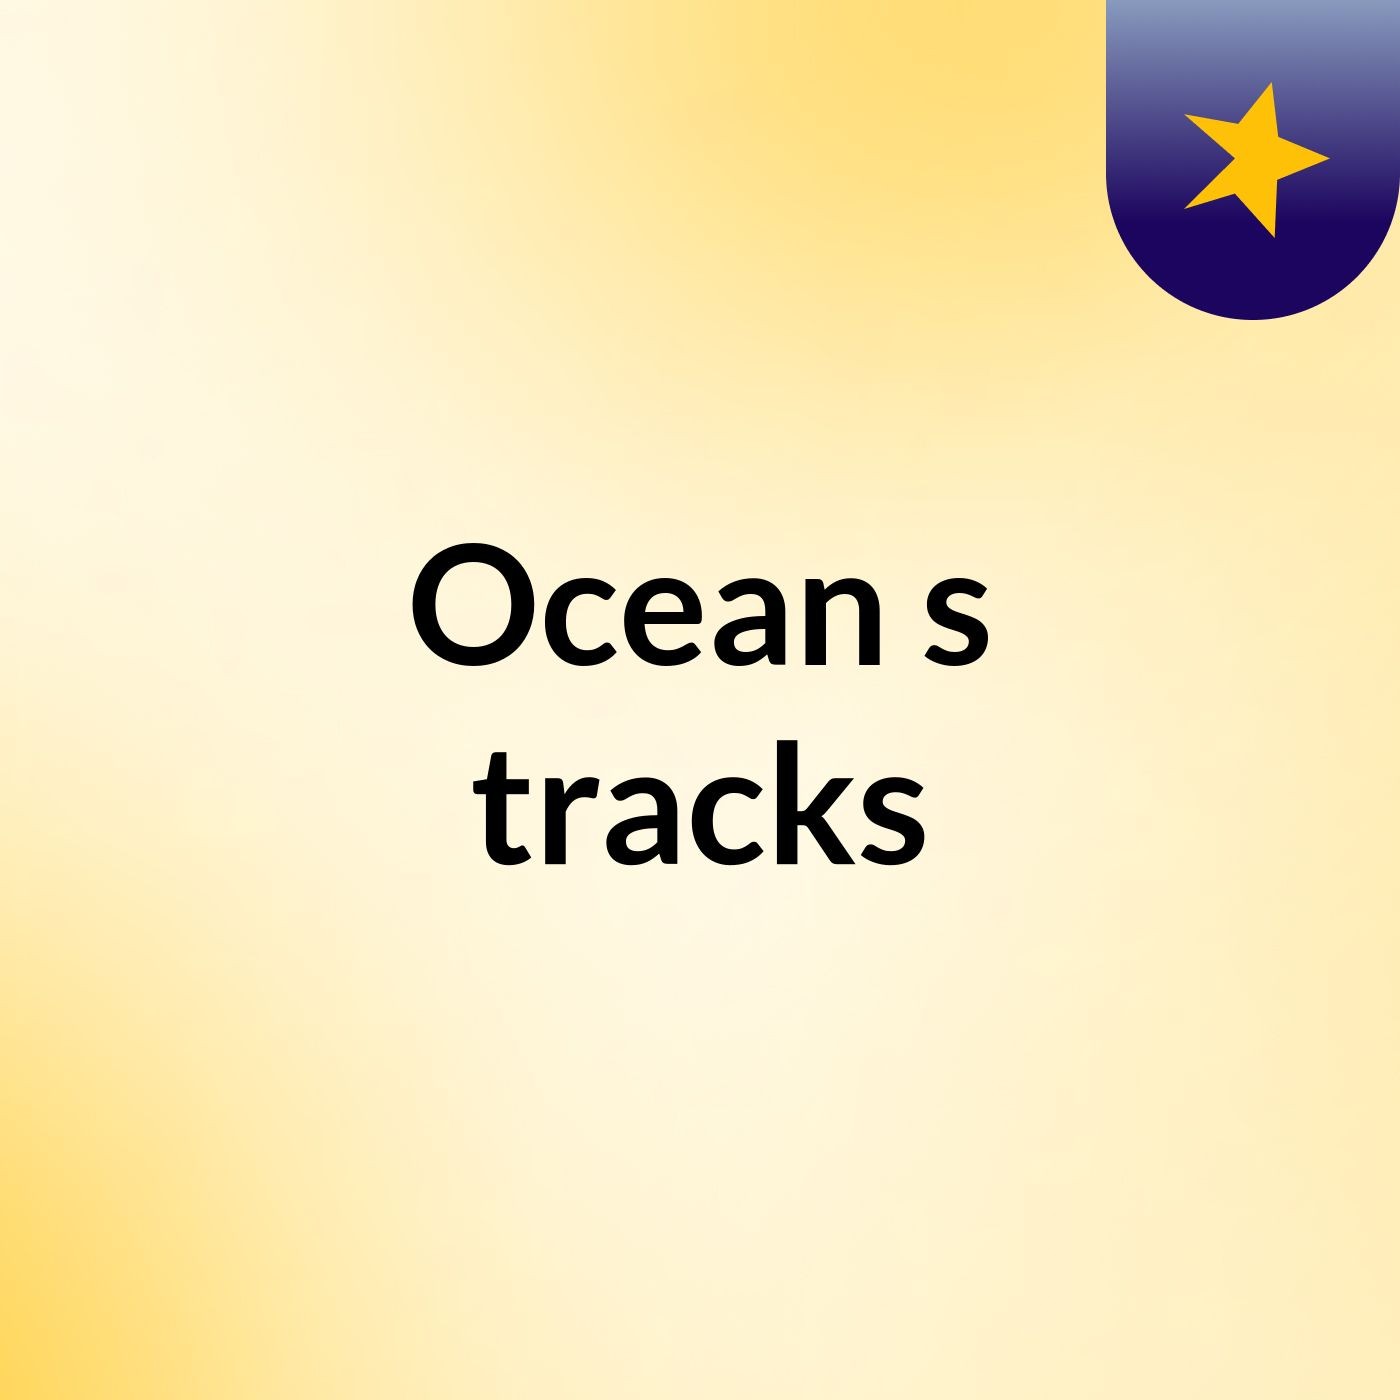 Ocean's tracks